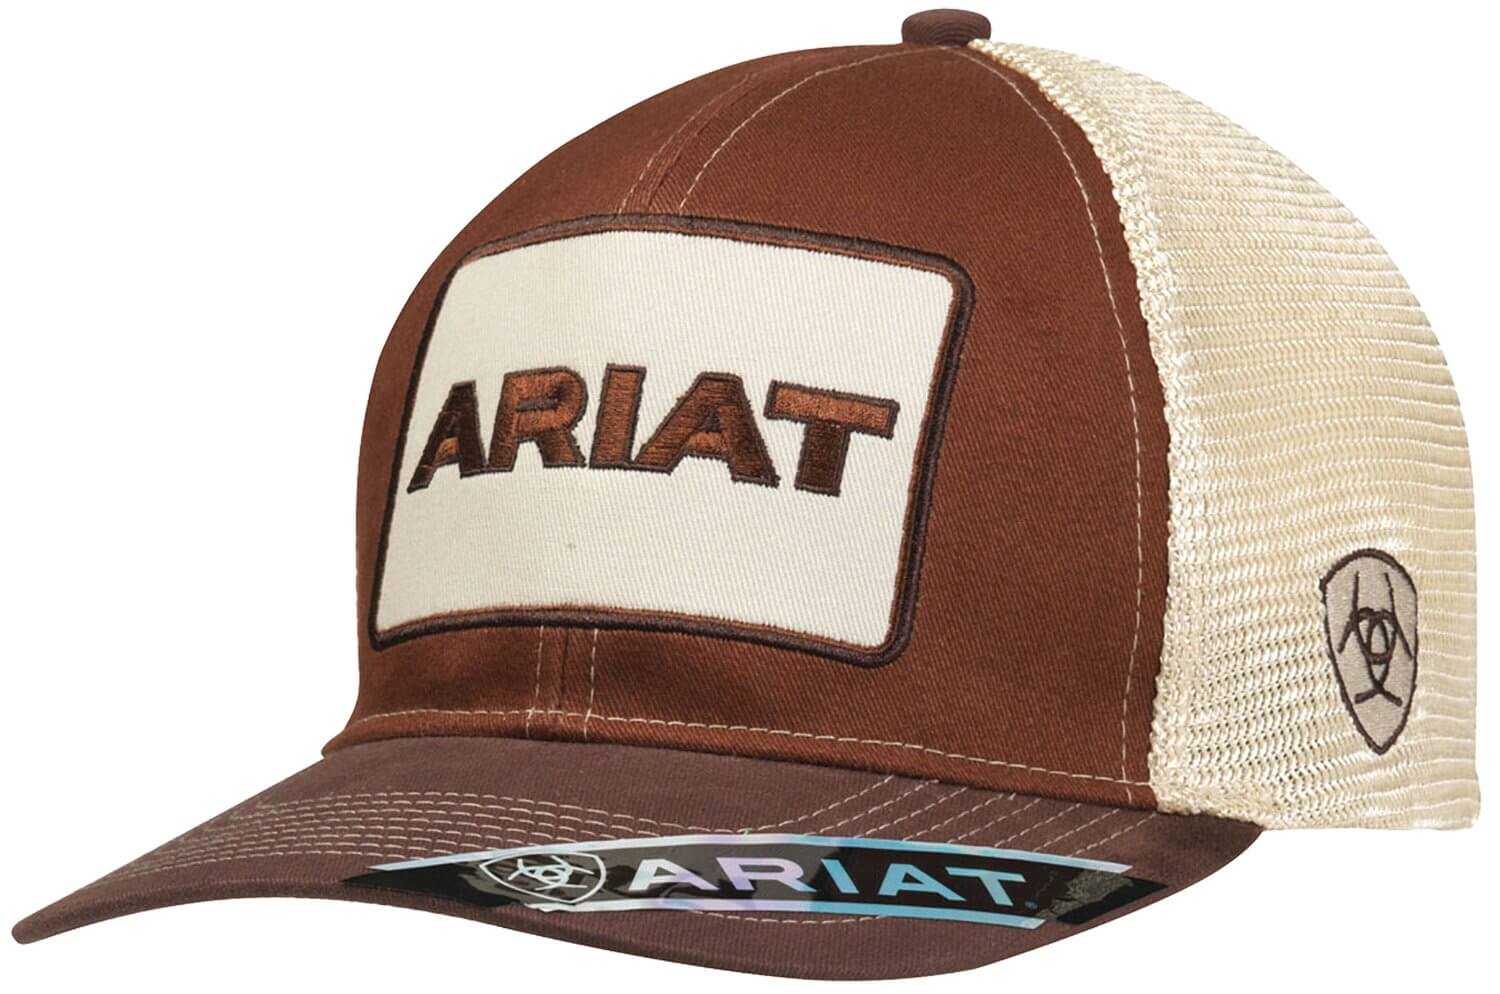 Ariat Logo - Ariat Men's Logo Patch cap w/Cream Mesh Back - Brown